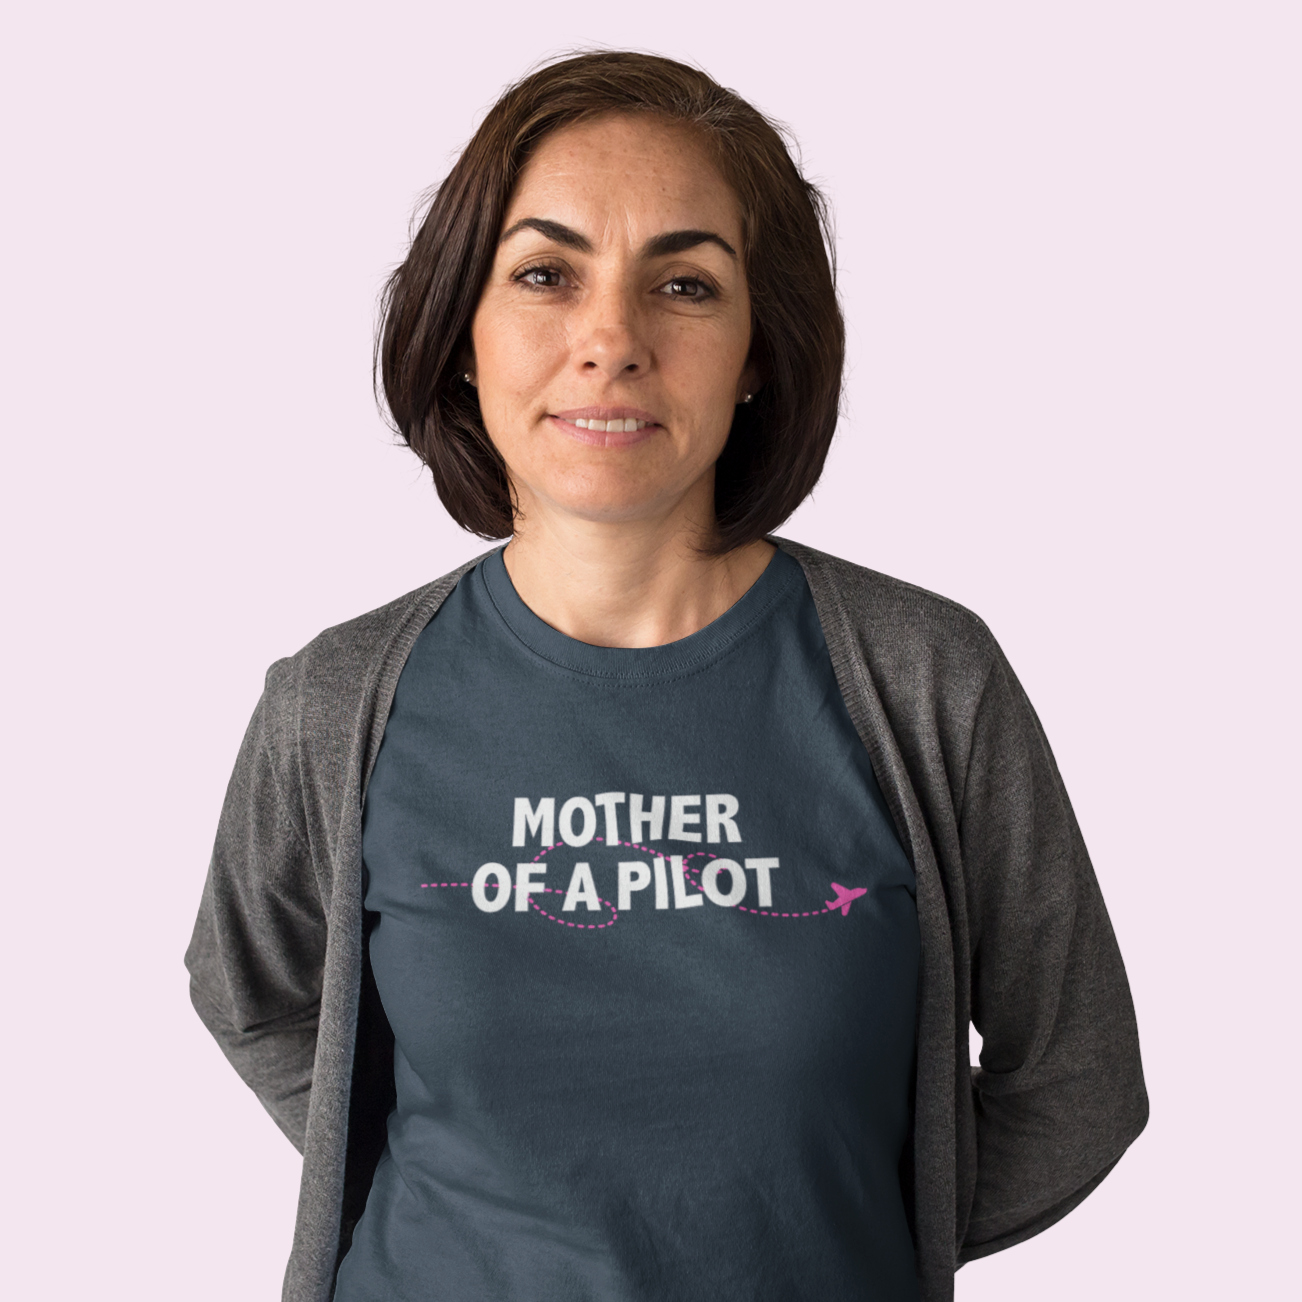 Mother of the/a Pilot T-shirt